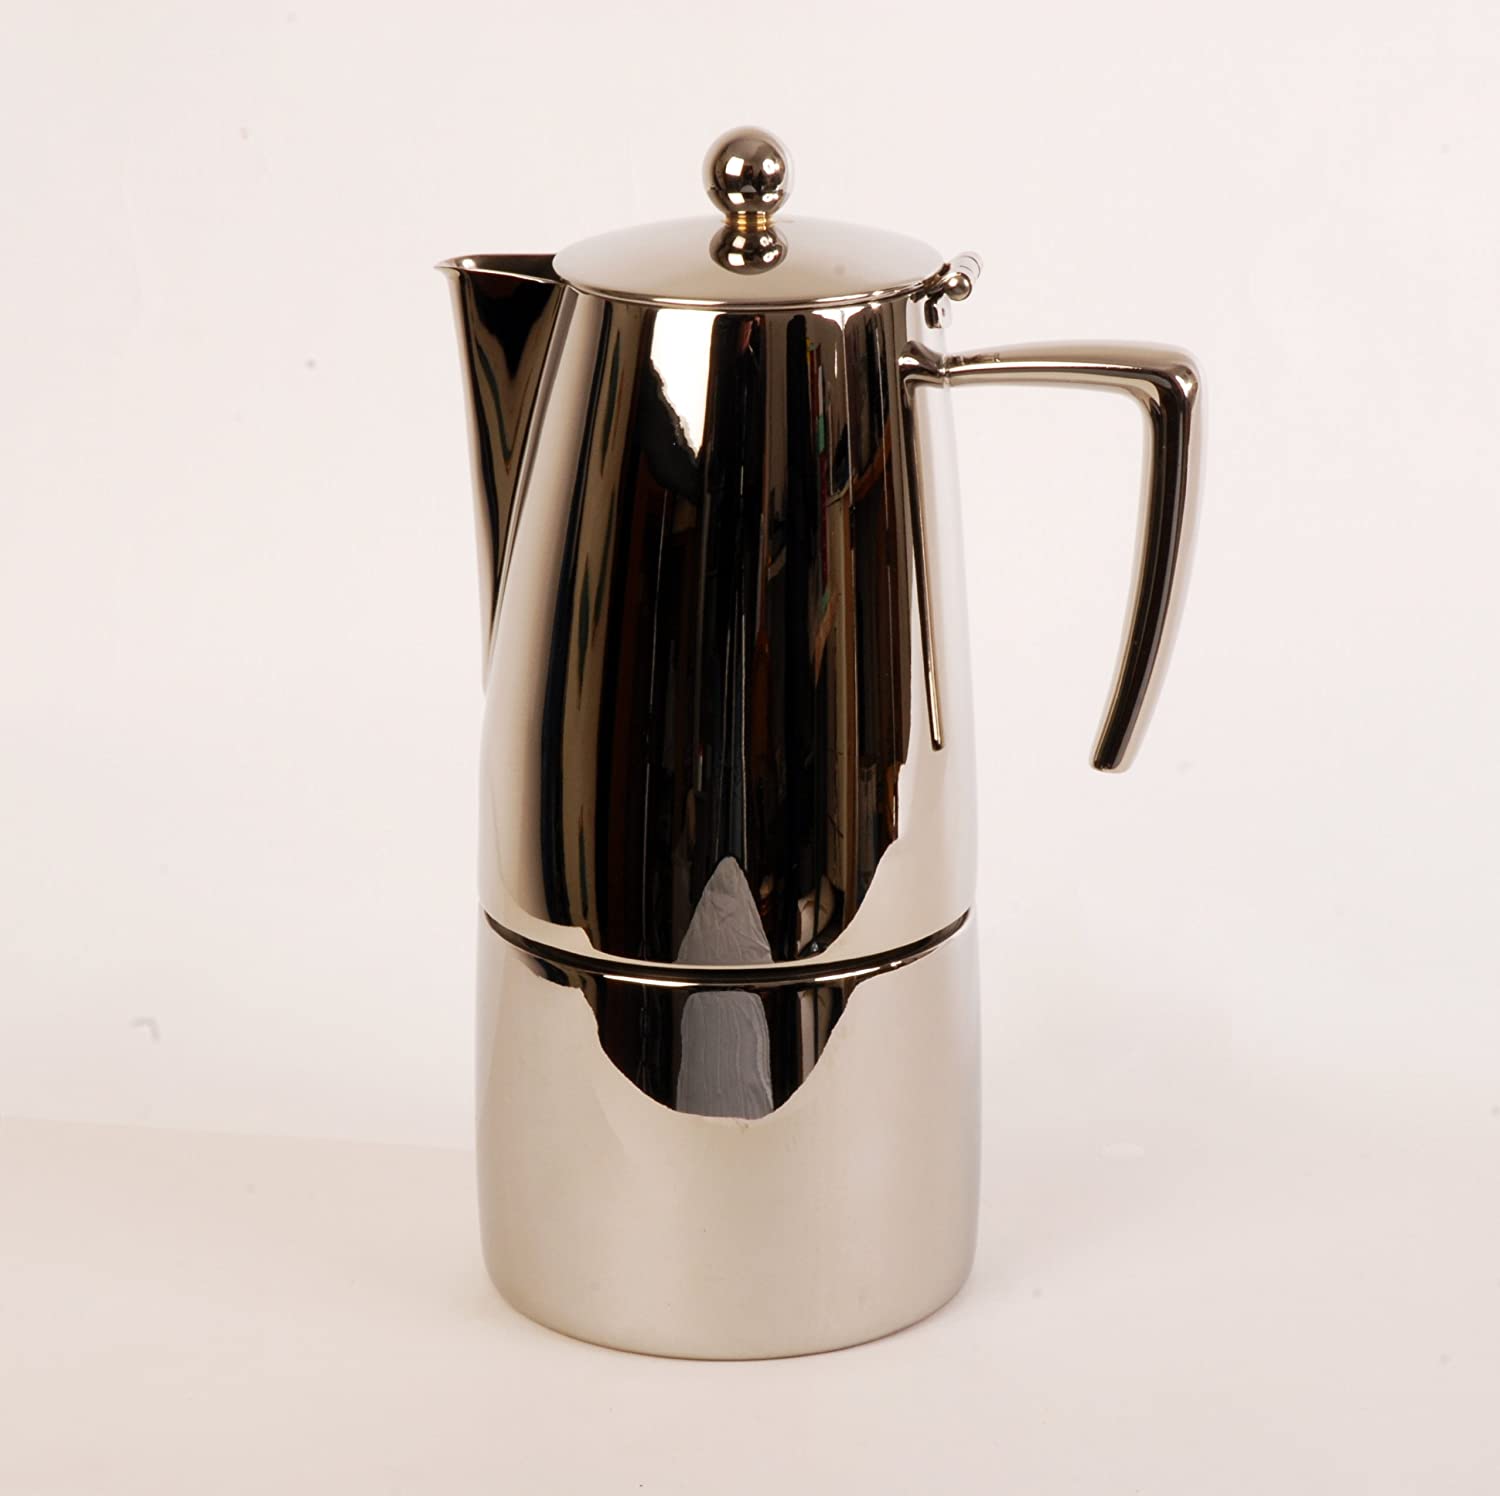 Ilsa Slancio Espresso Coffee Maker, 10 Cup, Polished